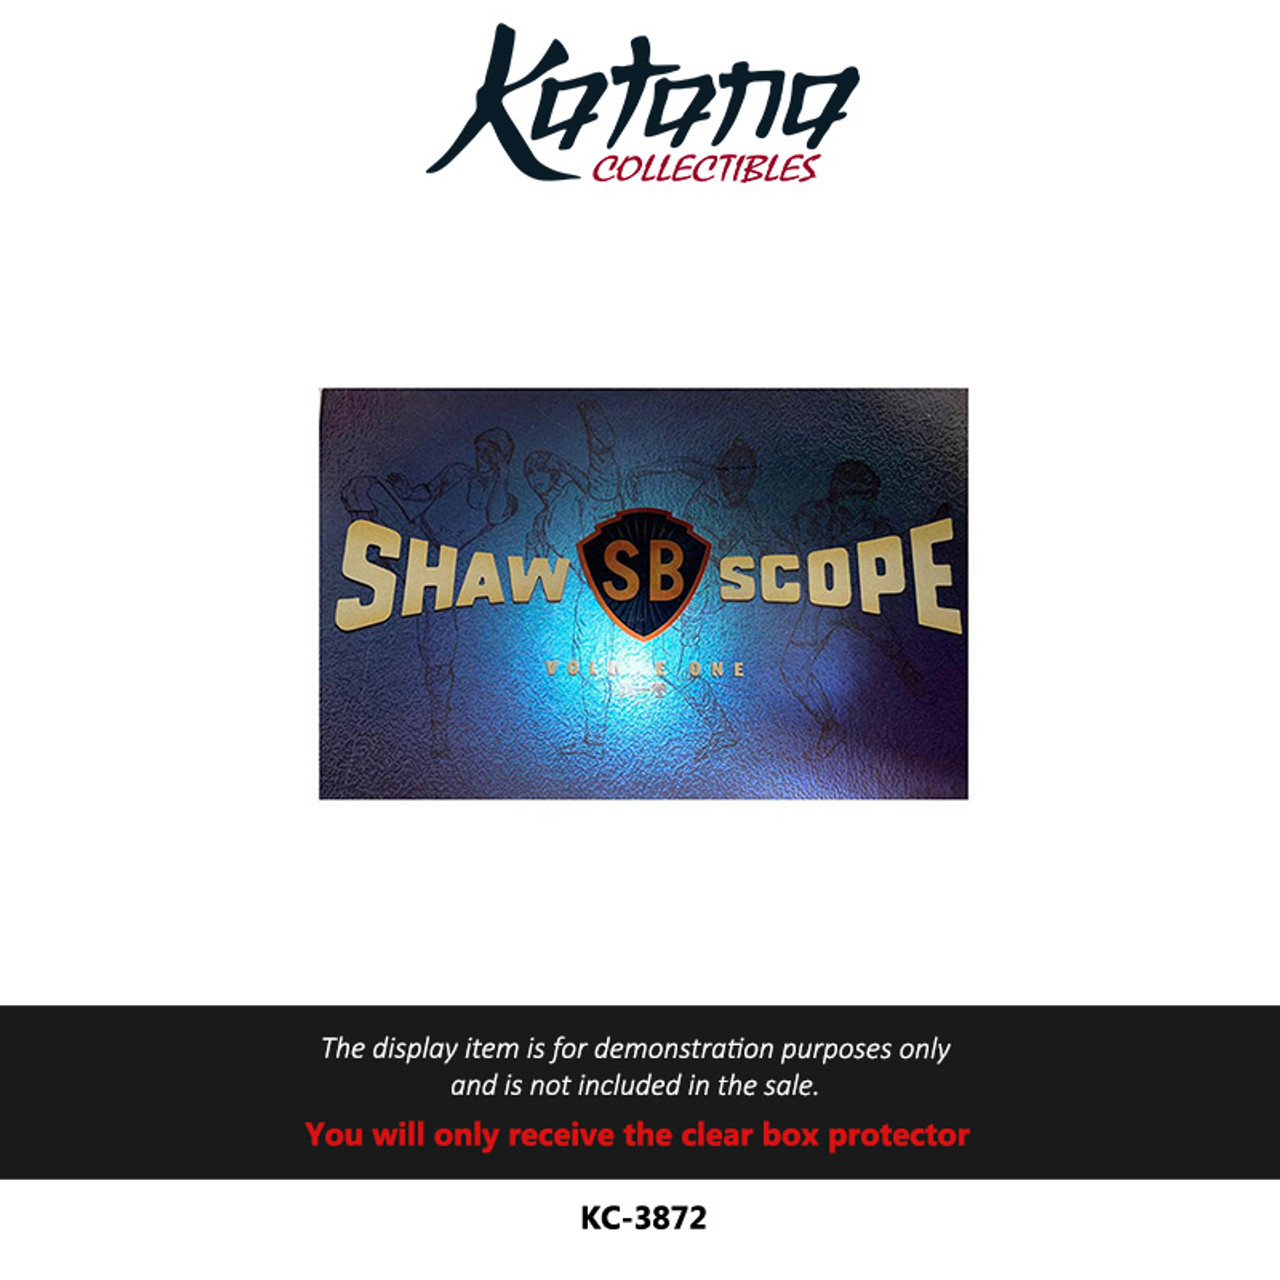 Katana Collectibles Protector For Arrow Films Shawscope Vol.1 BD